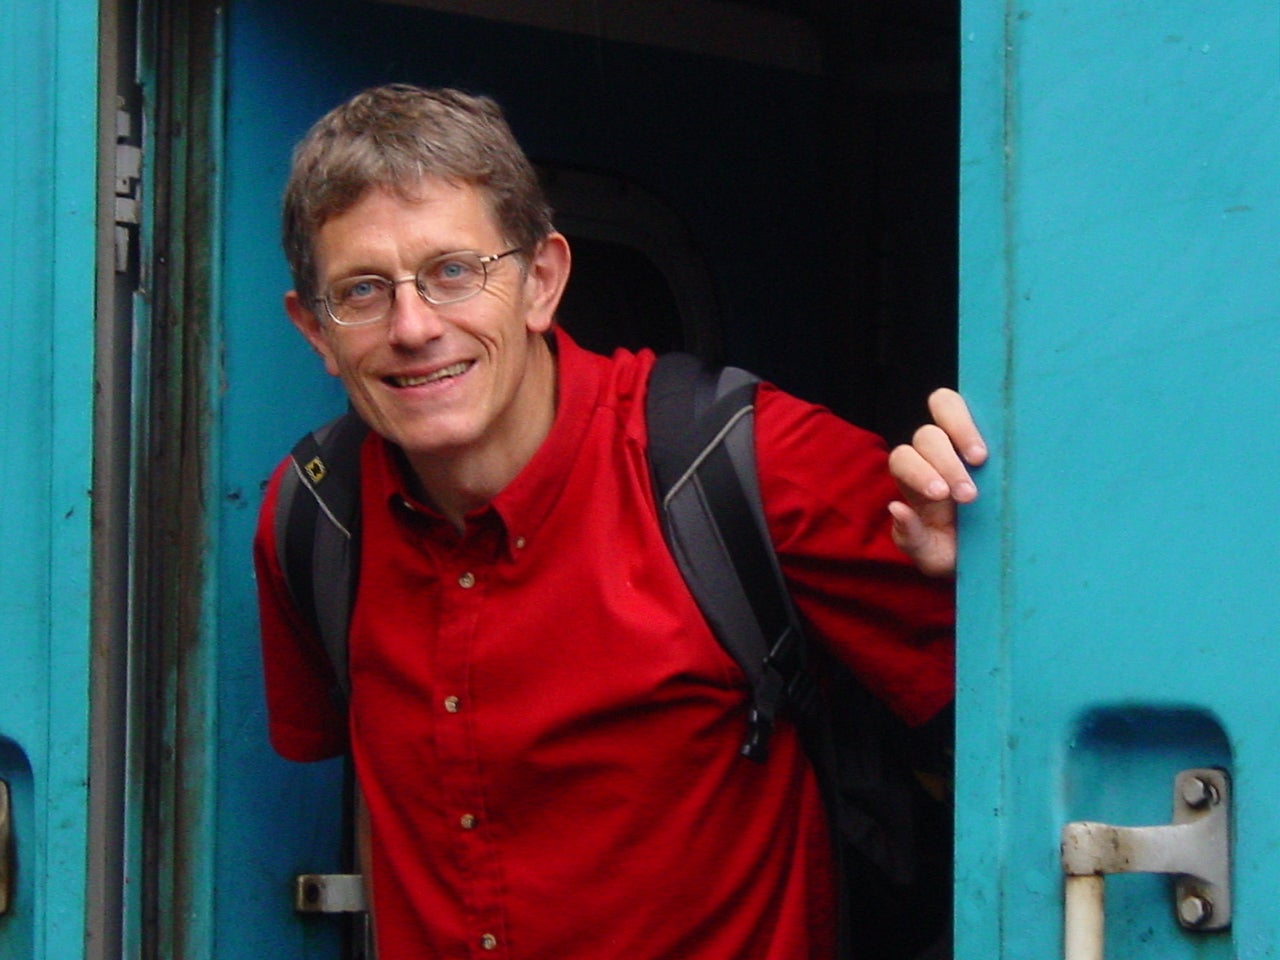 Going east: Simon Calder aboard the Rossiya train on the Trans-Siberian Railway in 2004